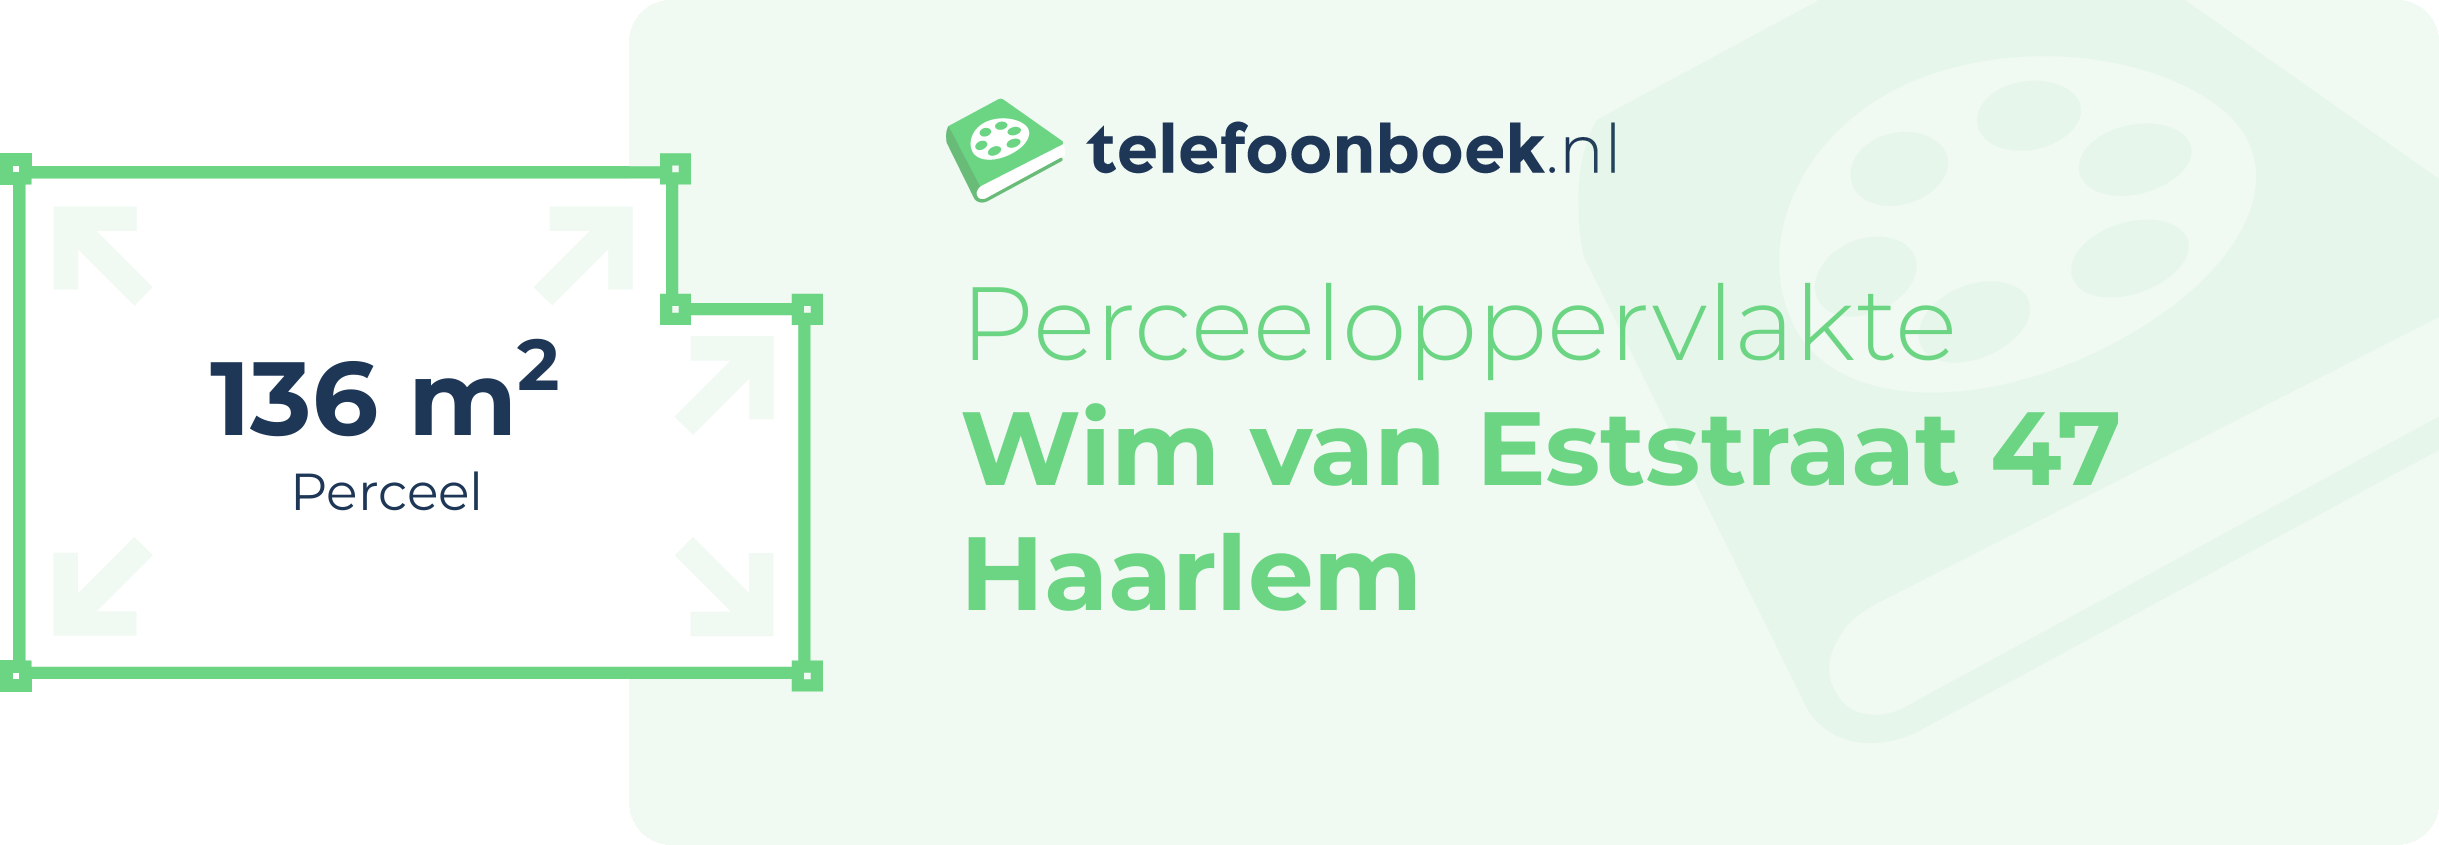 Perceeloppervlakte Wim Van Eststraat 47 Haarlem